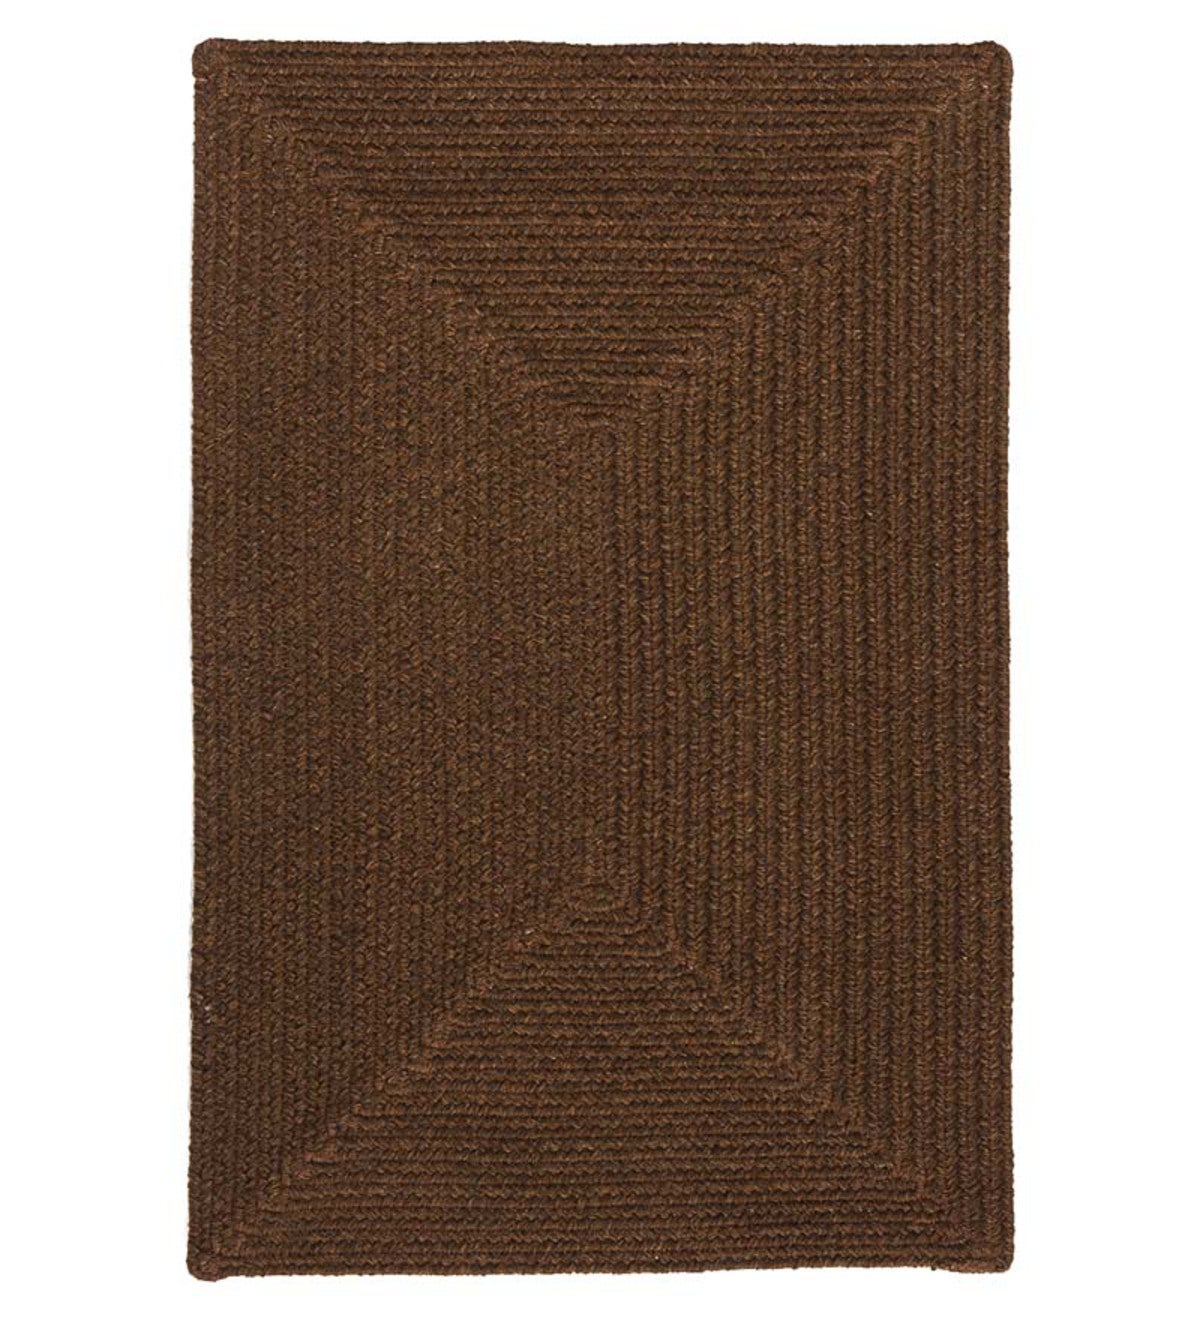 Bear Creek Rectangular Braided Wool Blend Rug, 24”x 36” - Chocolate